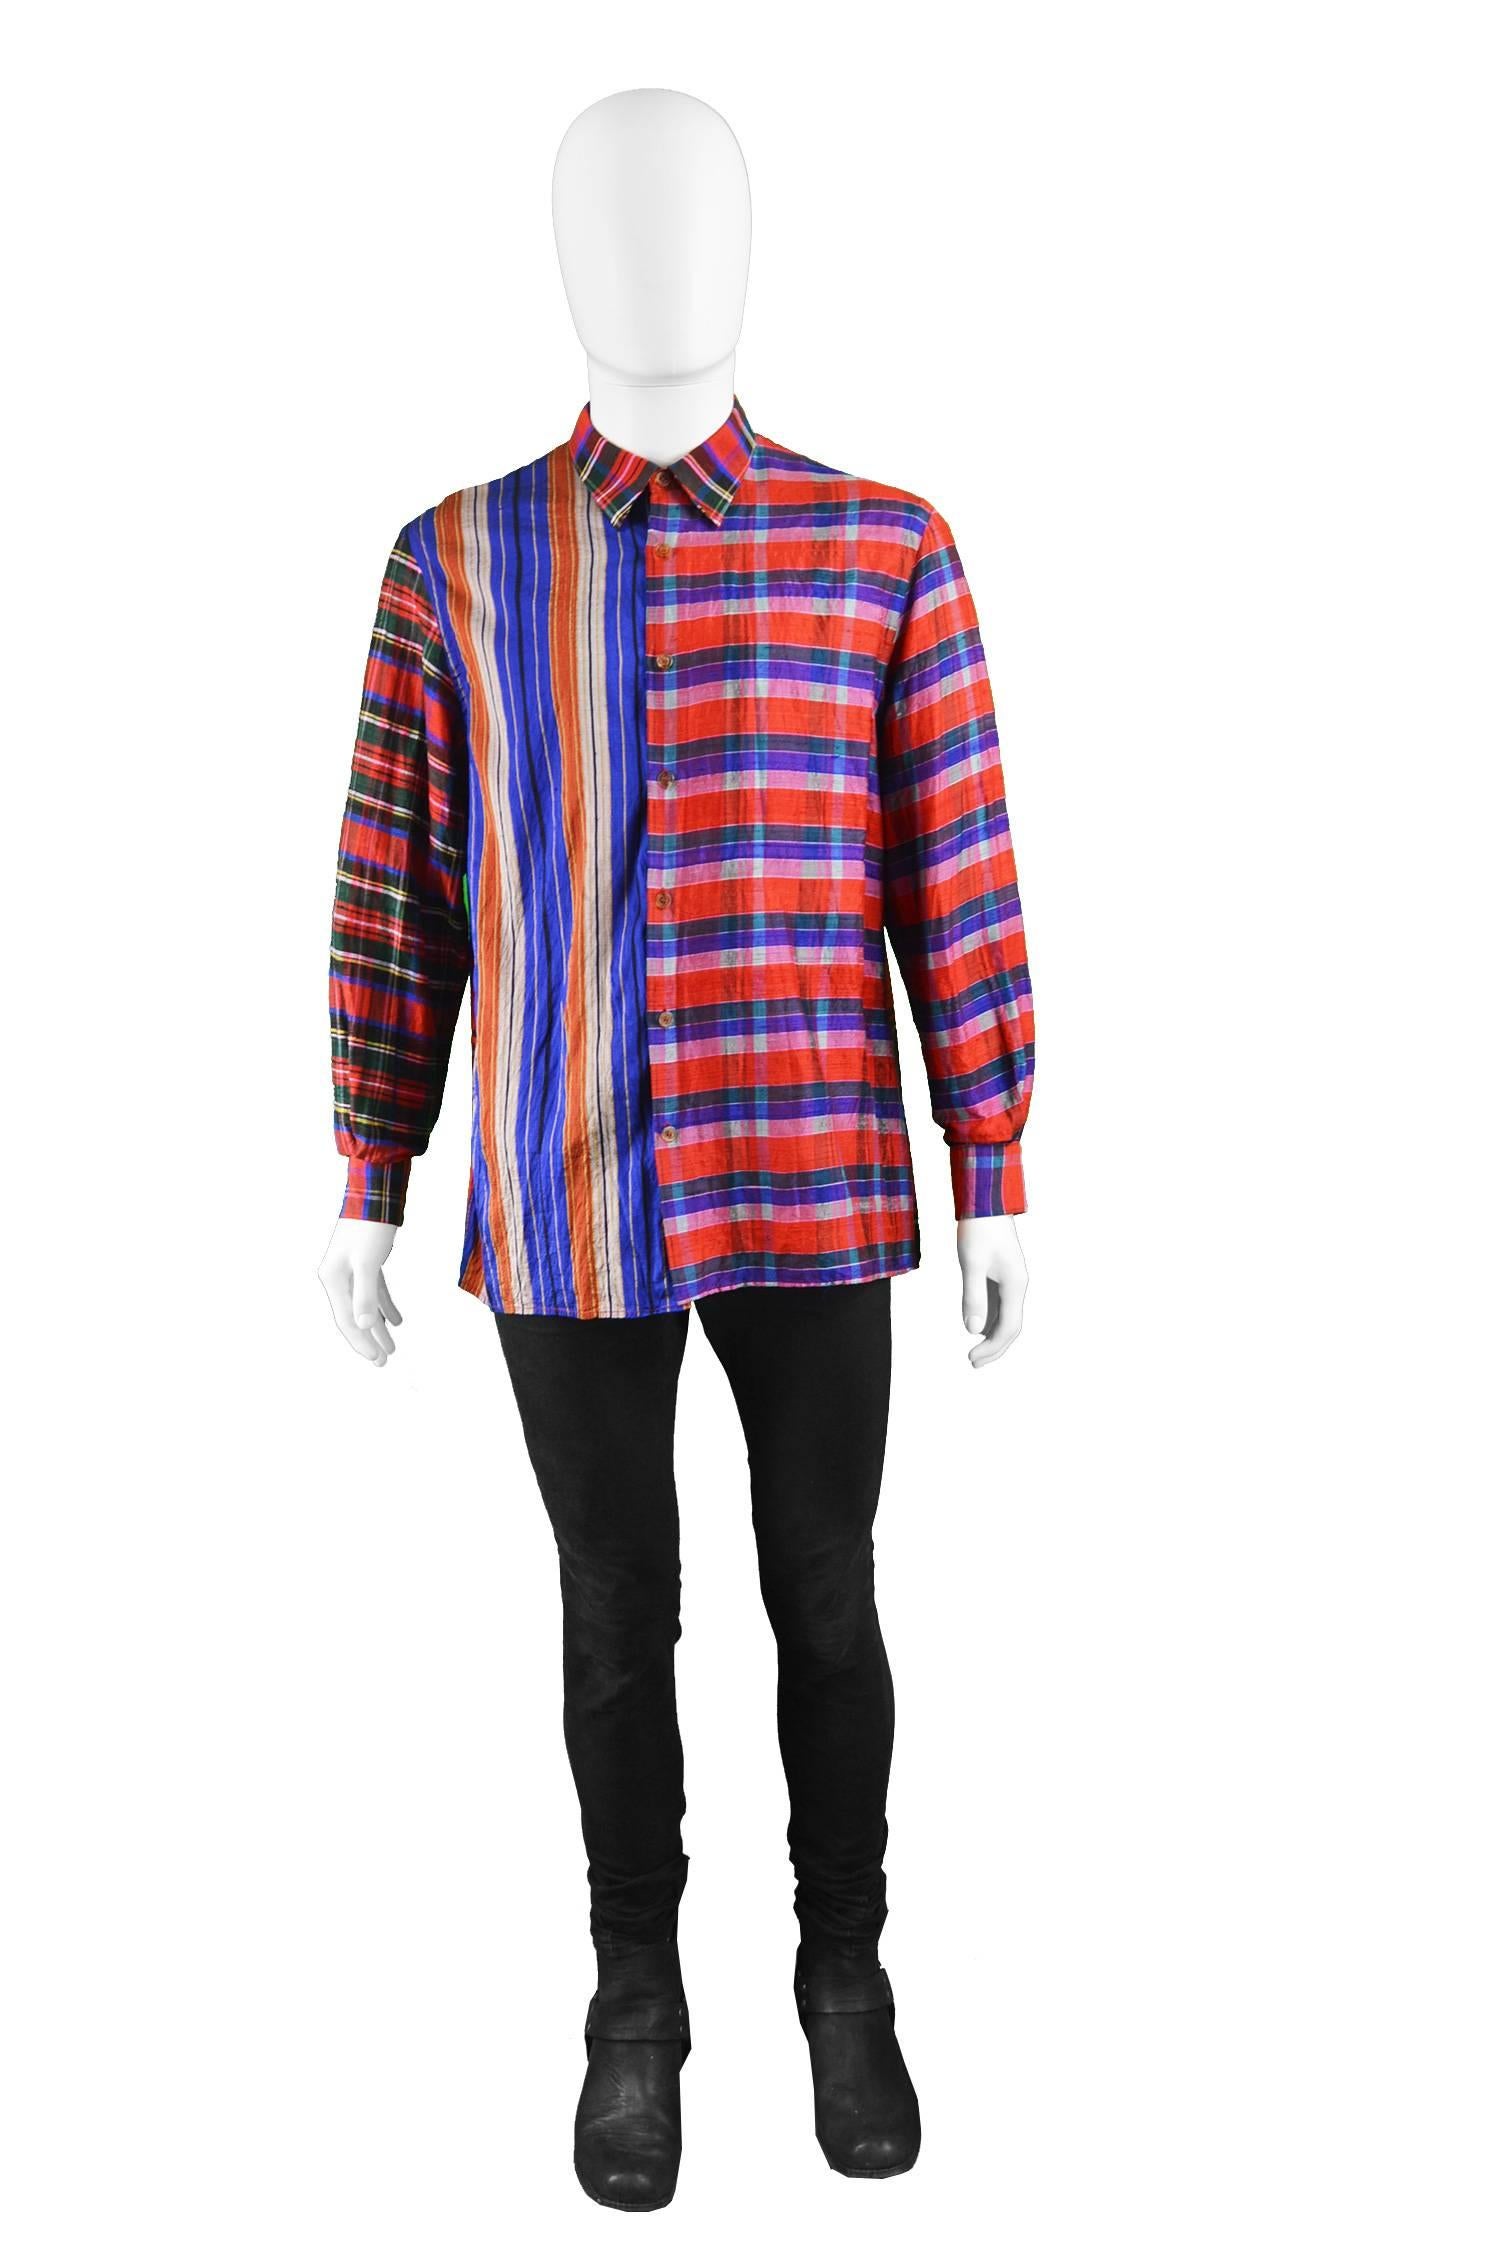 Gene Cabaleiro Eccentric Vintage Mens Silk Plaid Patchwork Shirt, 1990s

Estimated Size: Men’s XL but looks good oversized on a Medium to Large. 
Chest - 46” / 117cm
Waist - 44” / 112cm
Length (Shoulder to Hem) - 27” / 68cm
Shoulder to Shoulder -